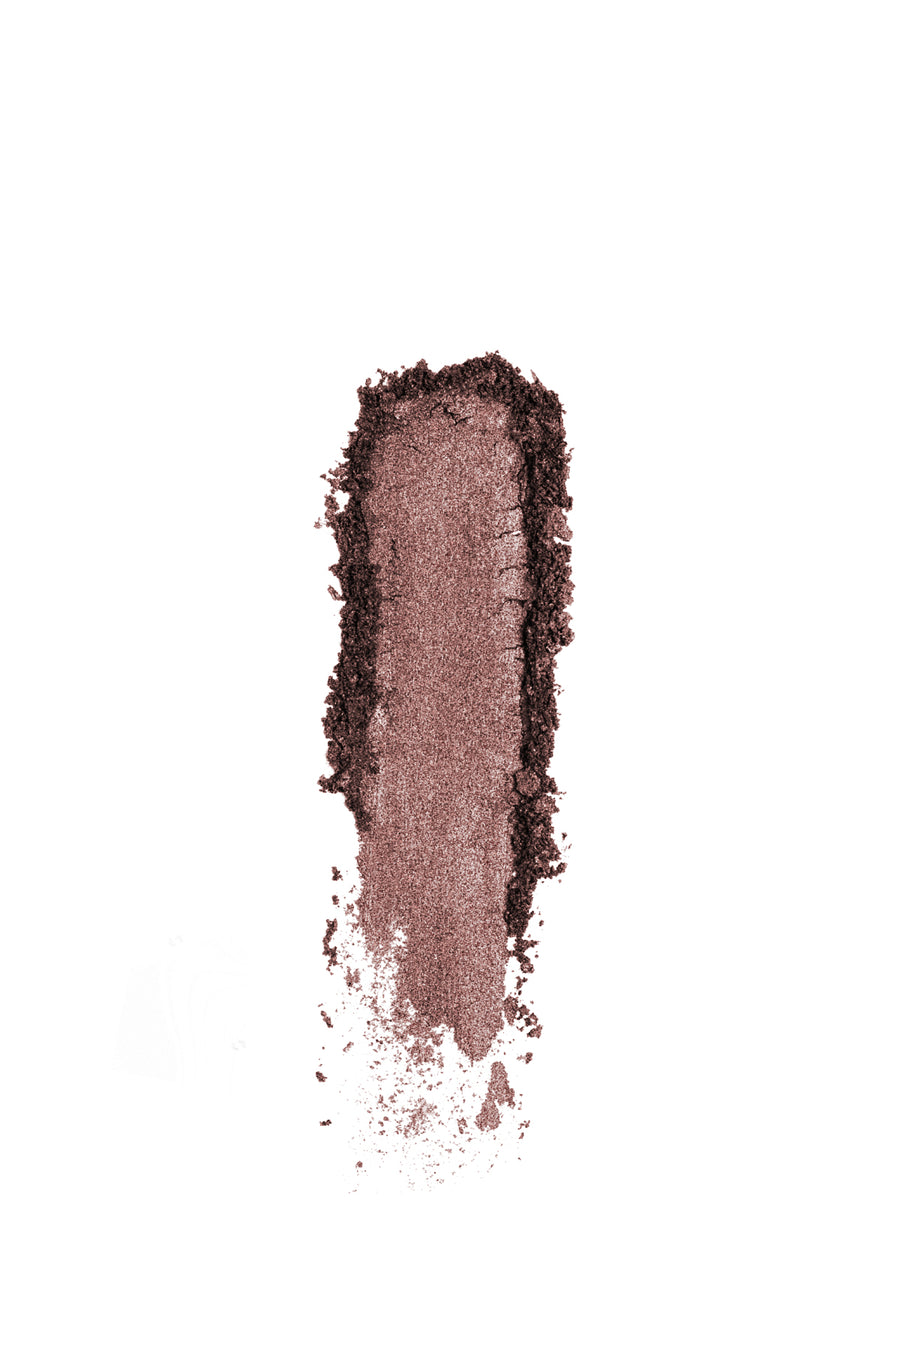 Shimmer Eyeshadow #10 - Brown Metal - Blend Mineral Cosmetics